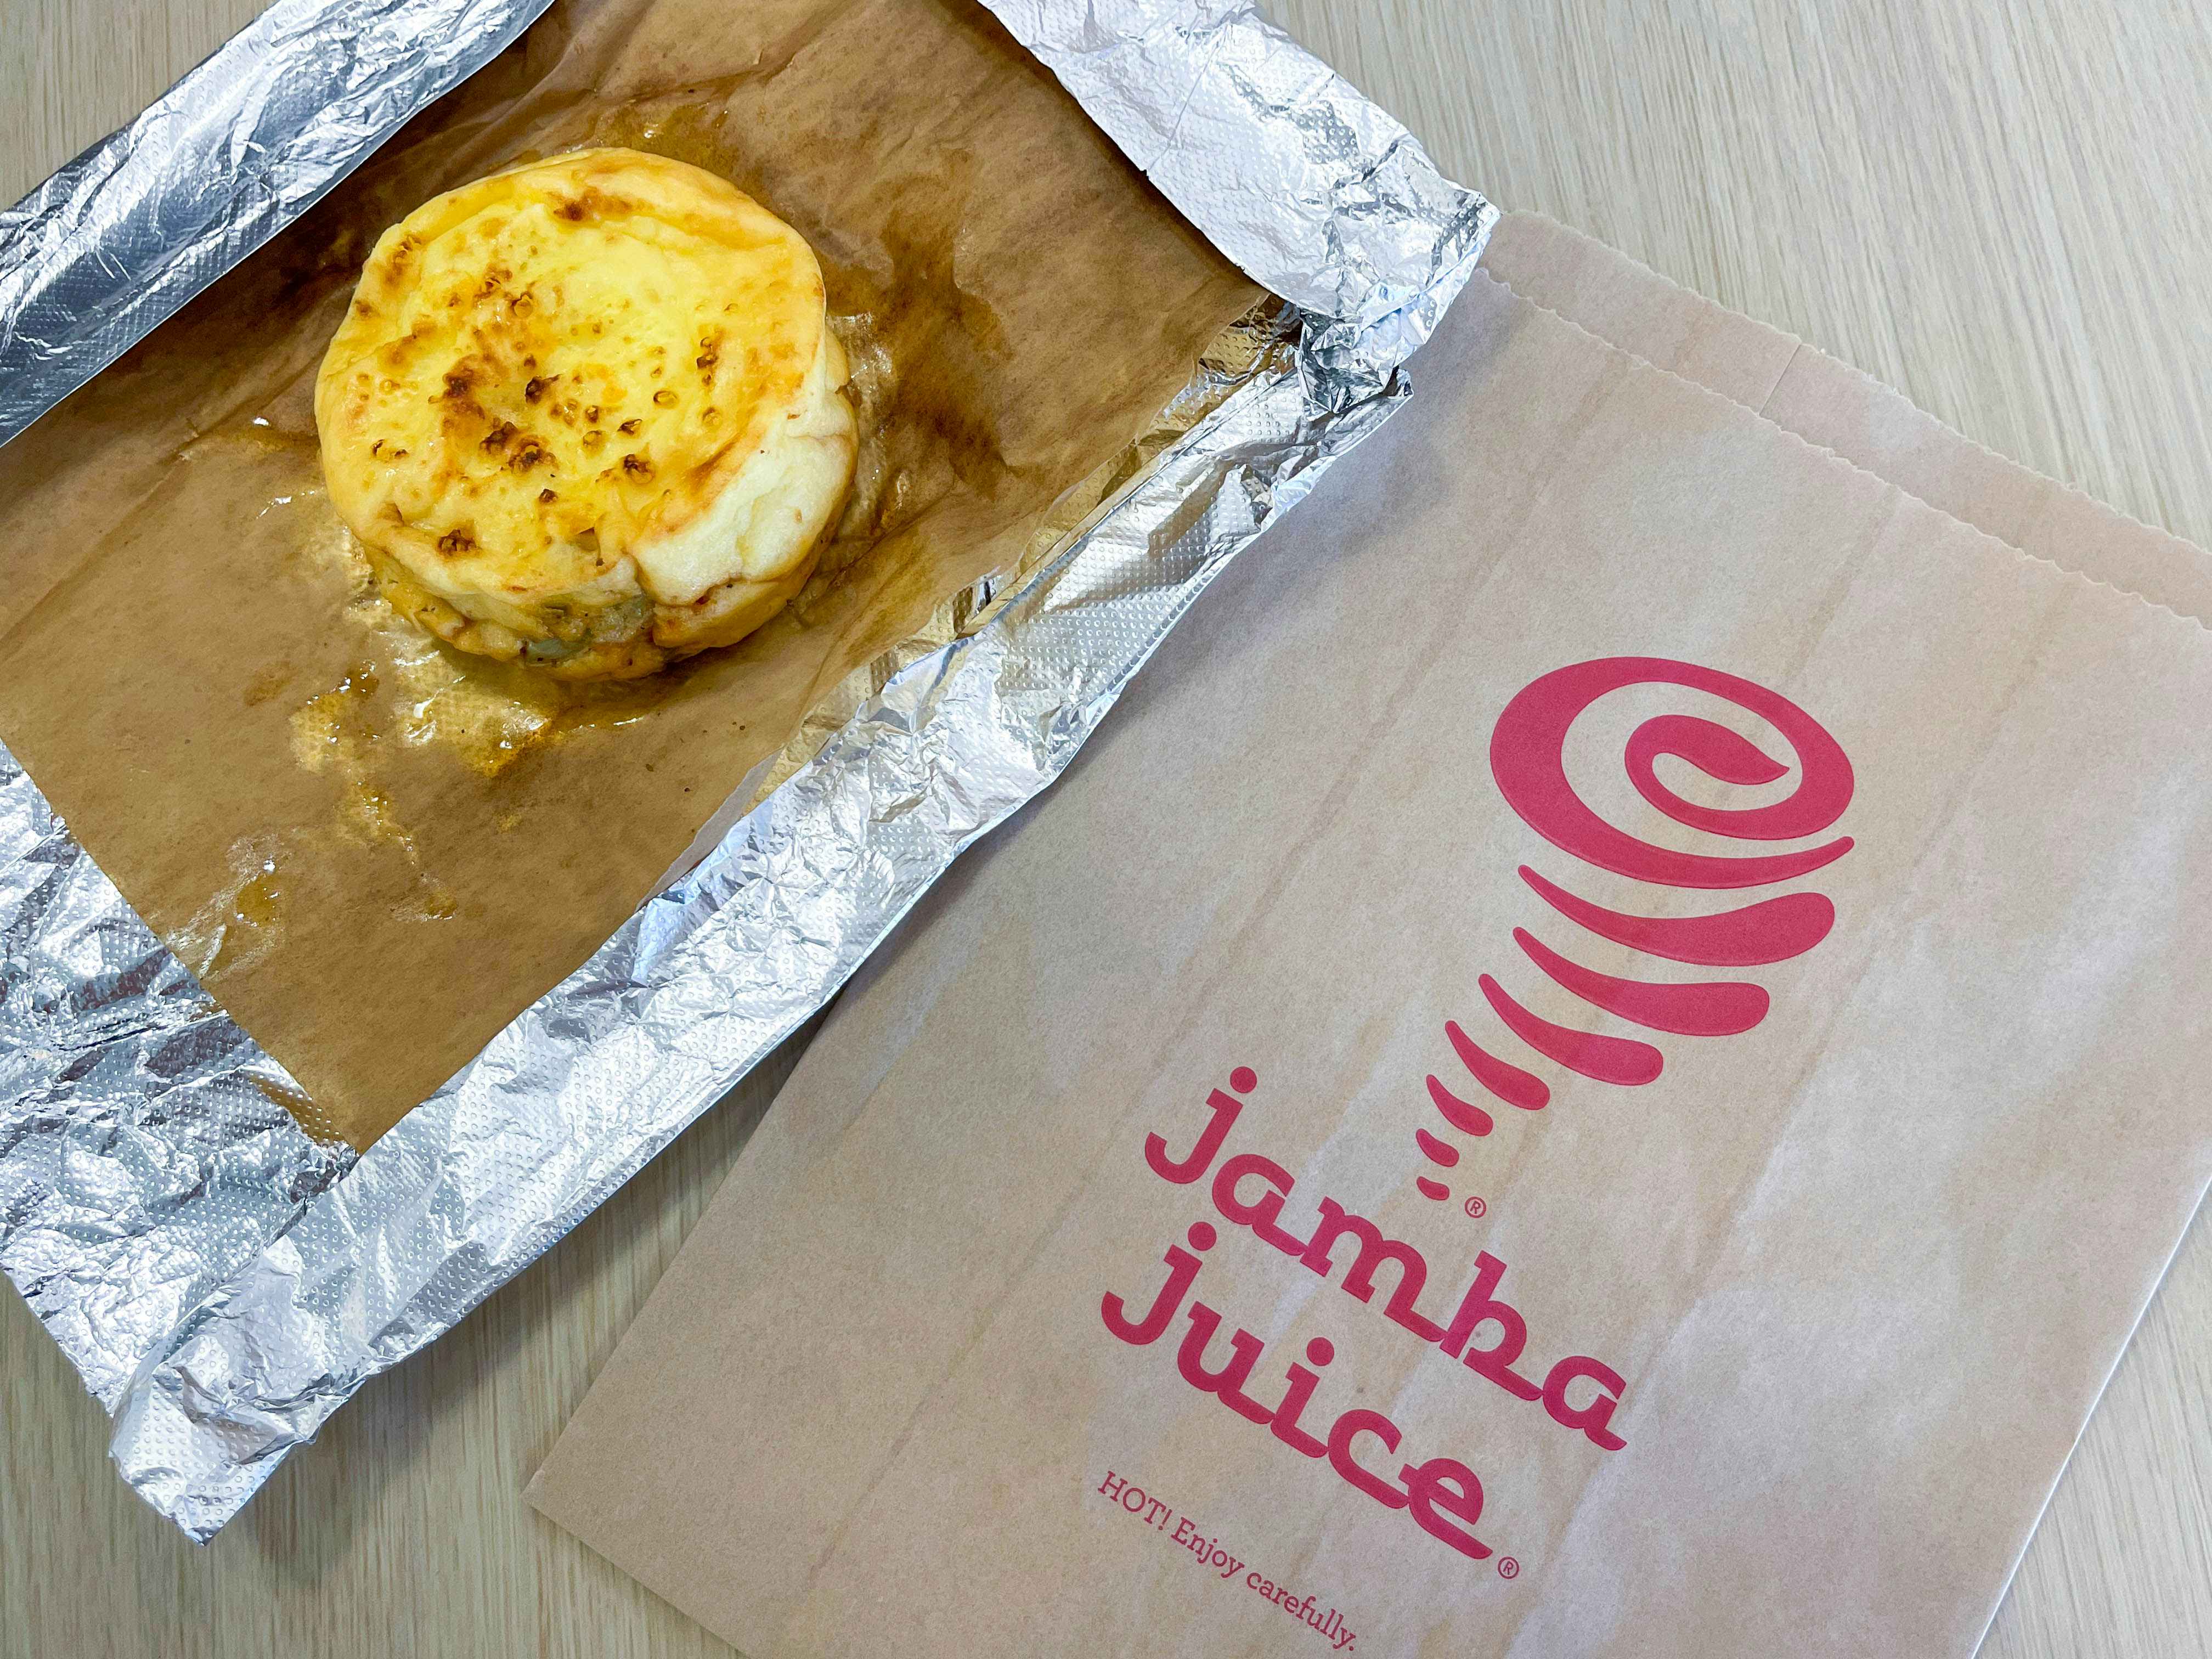 egg bite sitting on table near jamba juice packaging 